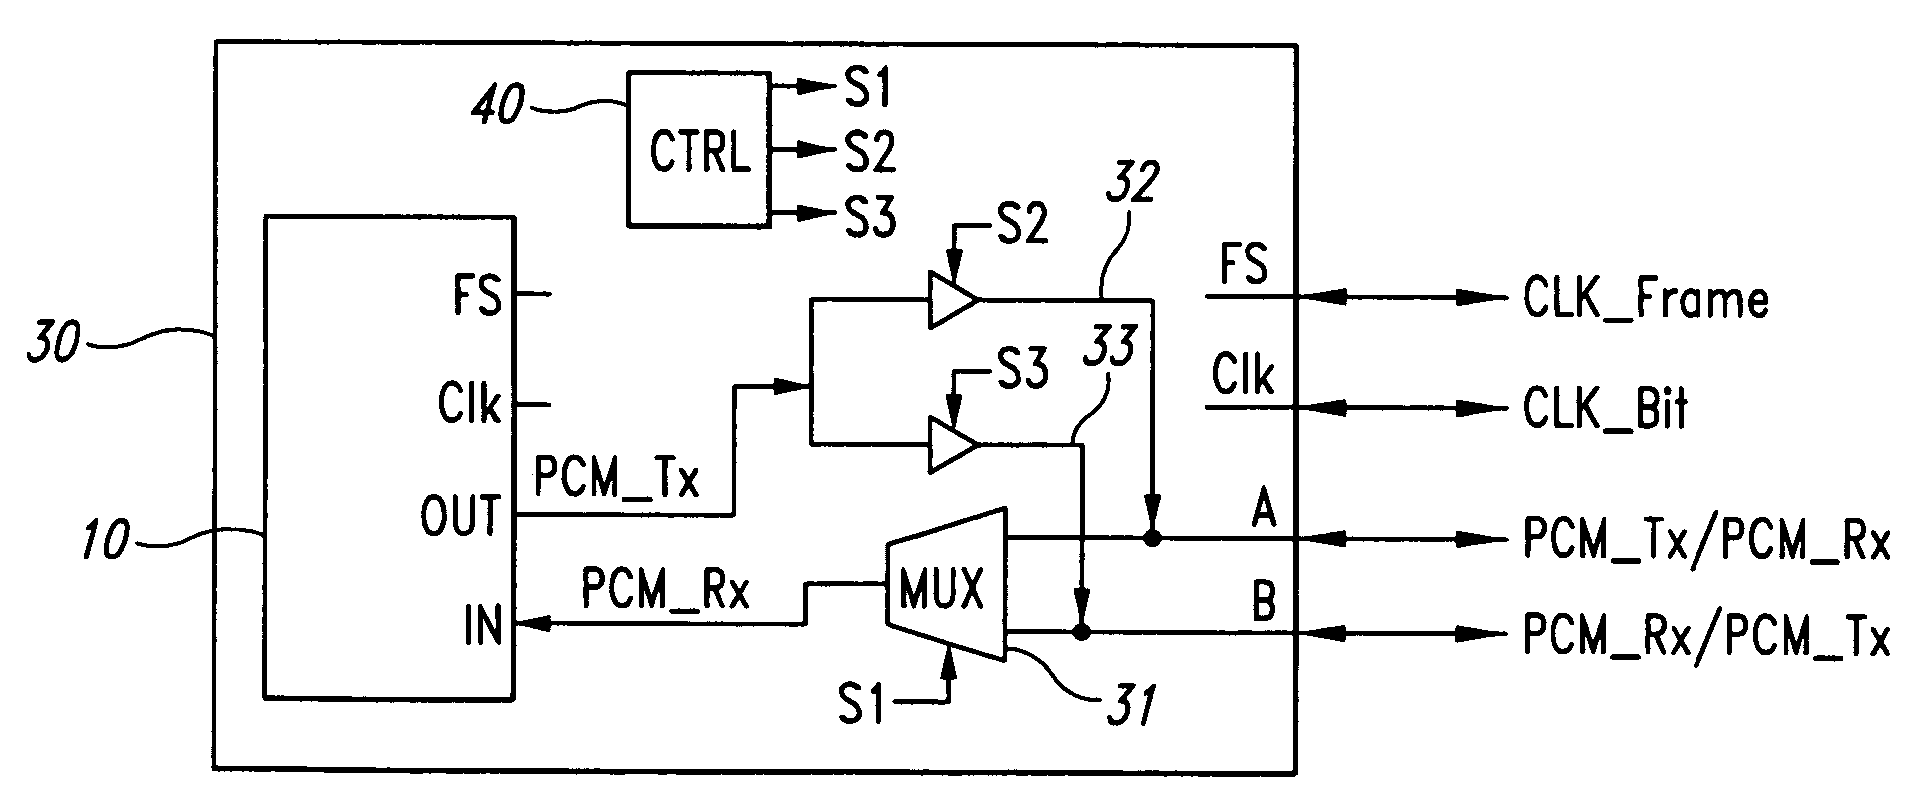 PCM type interface